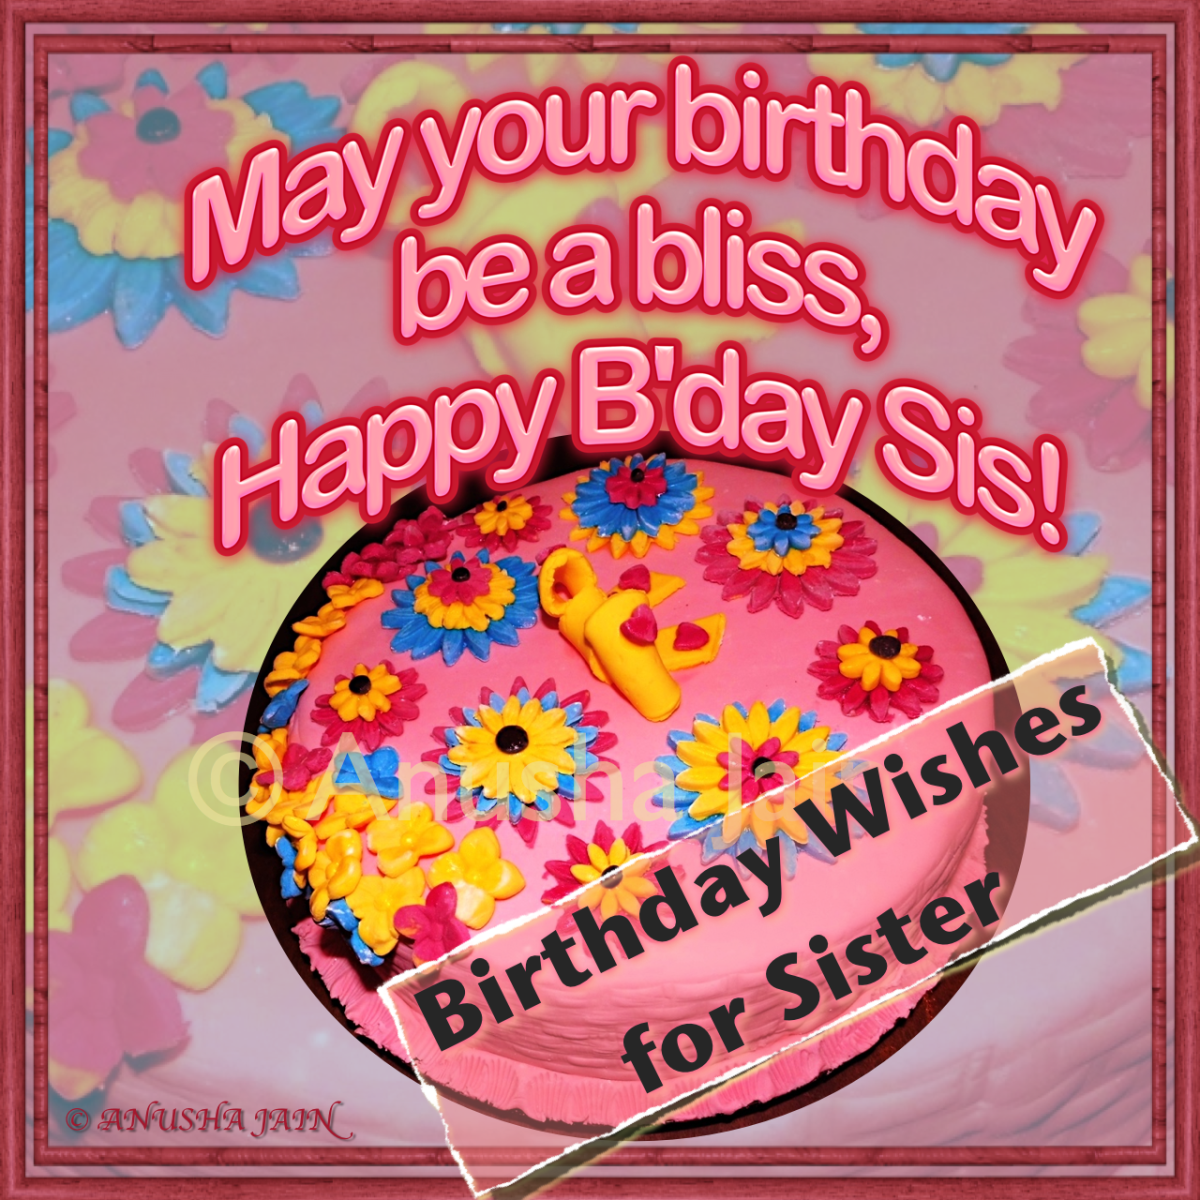 Birthday Cake for Sister wishing a Blissfully Happy Birthday 